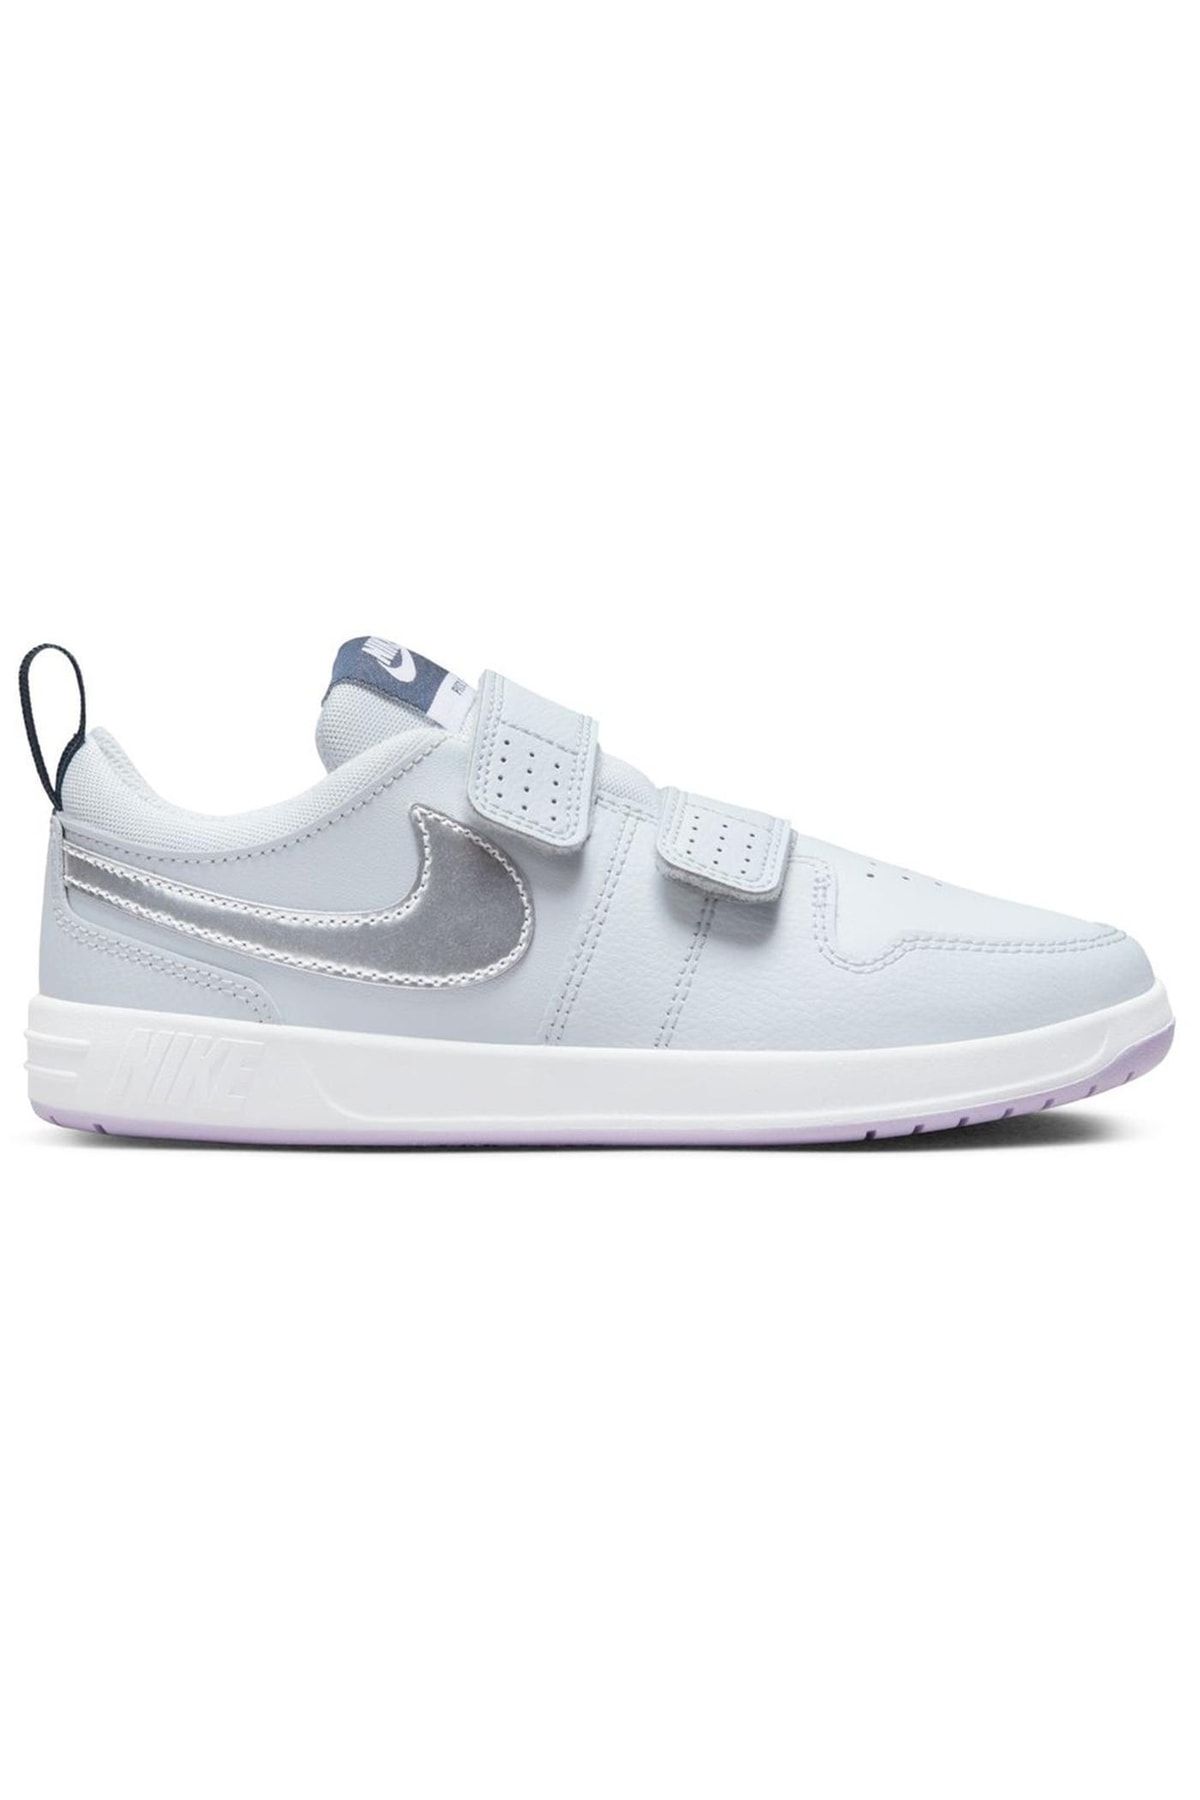 Nike Pico 5 (psv) Çocuk Gri Sneaker Ayakkabı